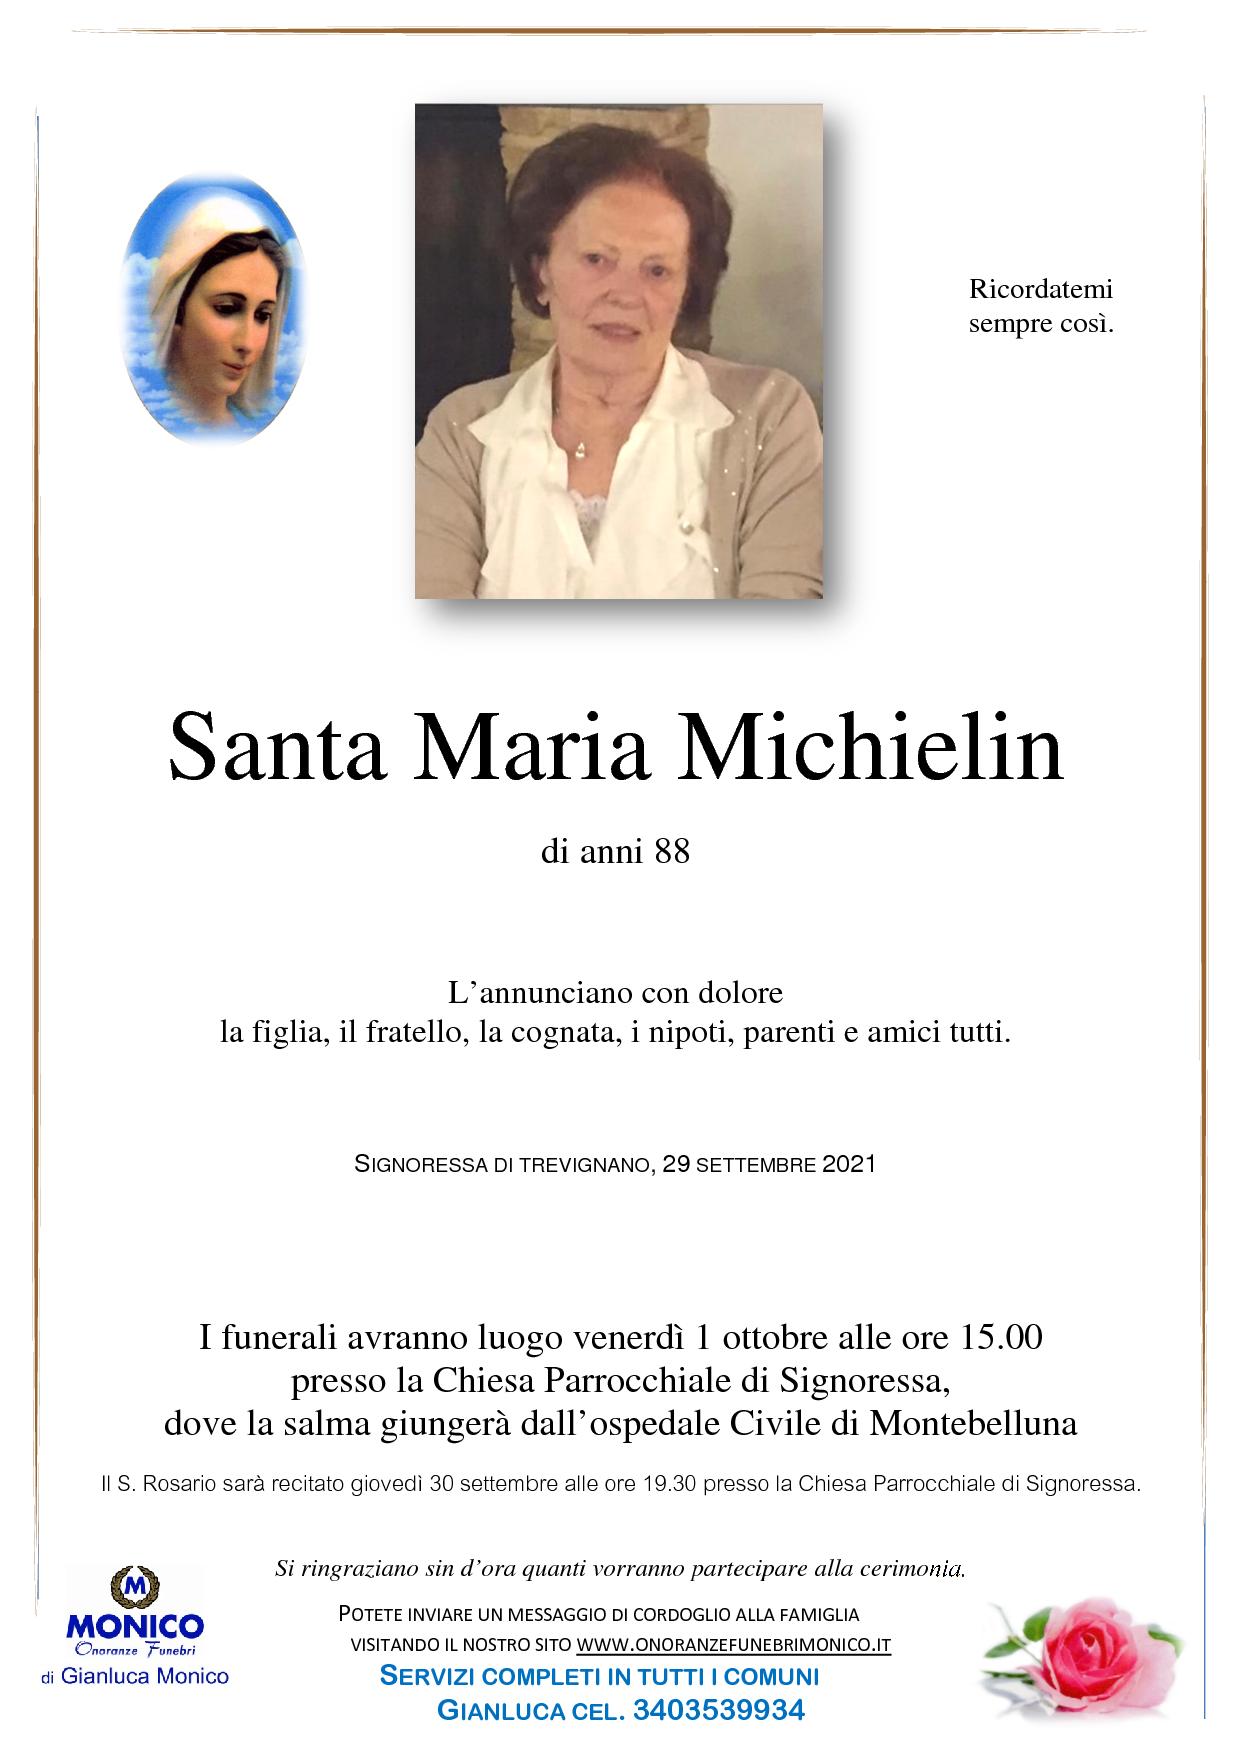 Michielin Santa Maria